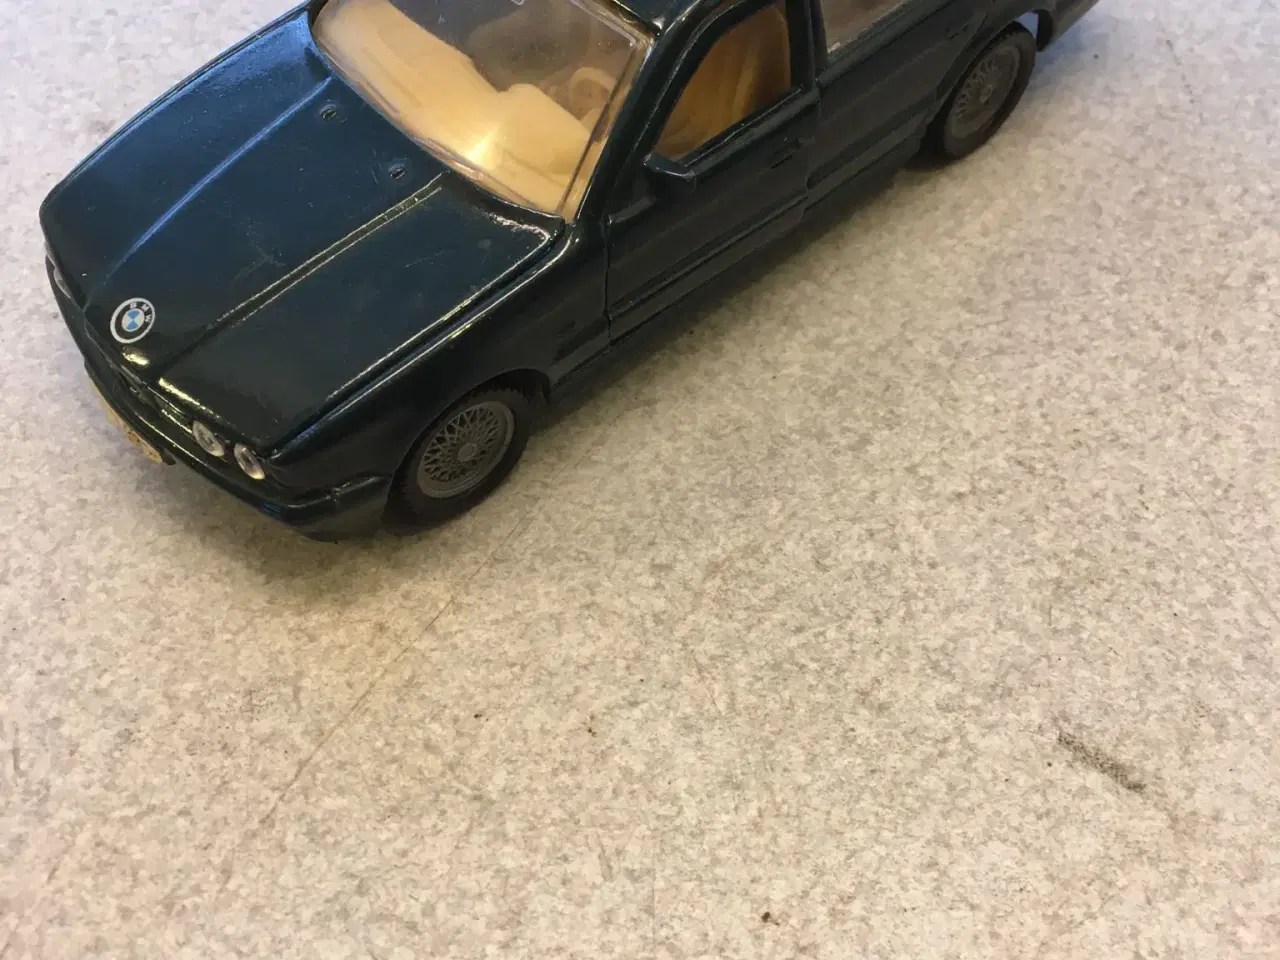 Billede 1 - BMW 525i fin metal Corgi model